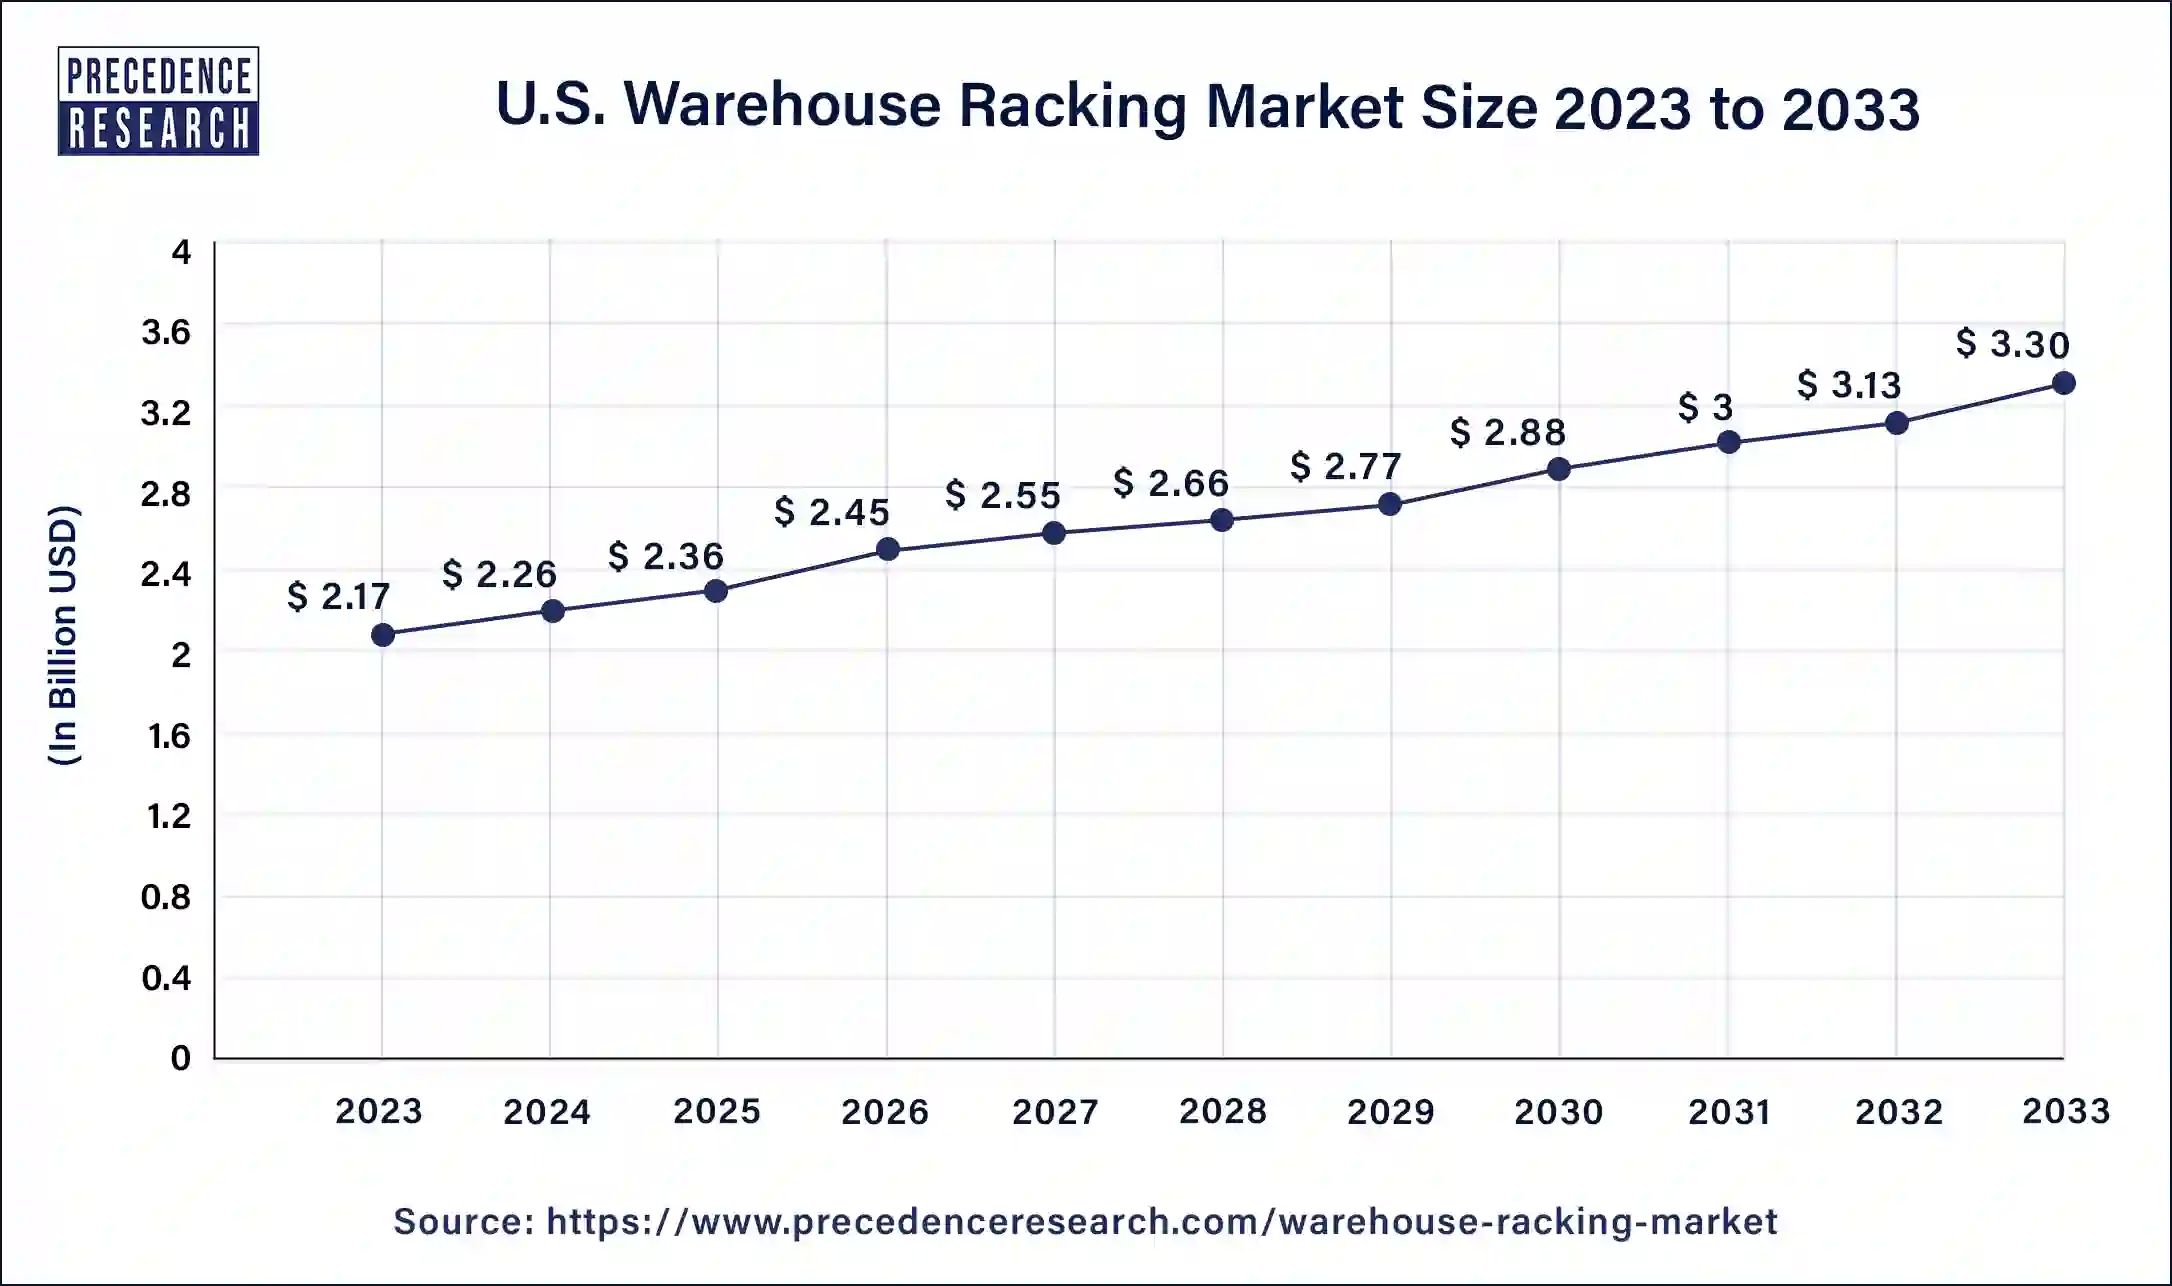 U.S. Warehouse Racking Market Size 2023 to 2033